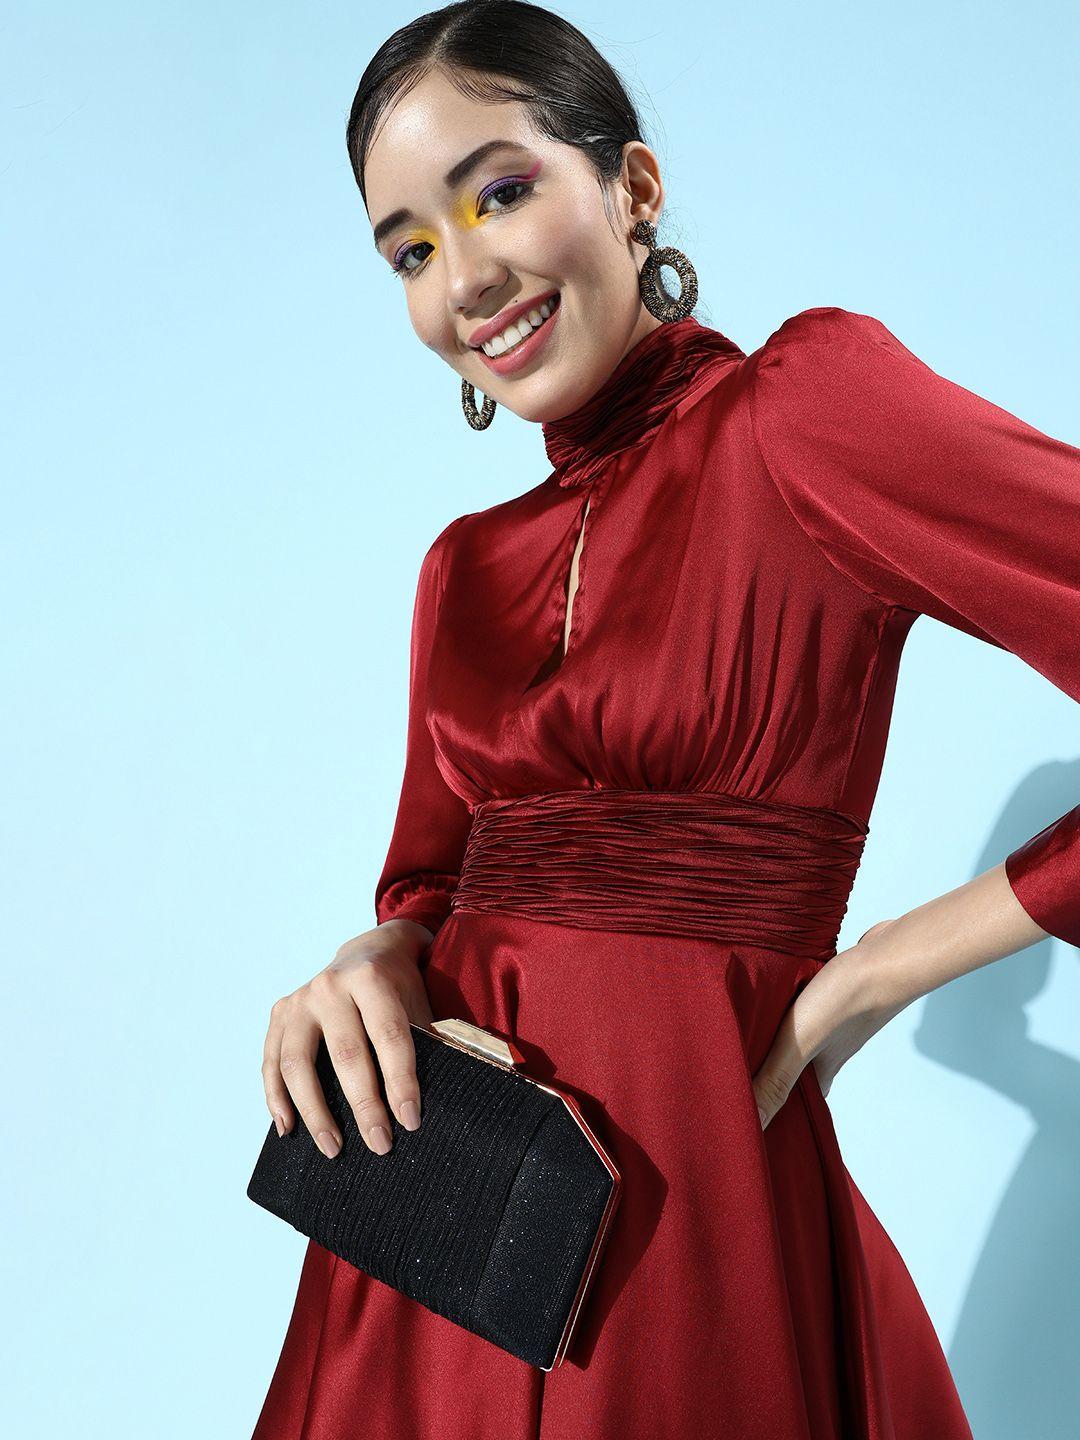 kassually women charming maroon sleek dress